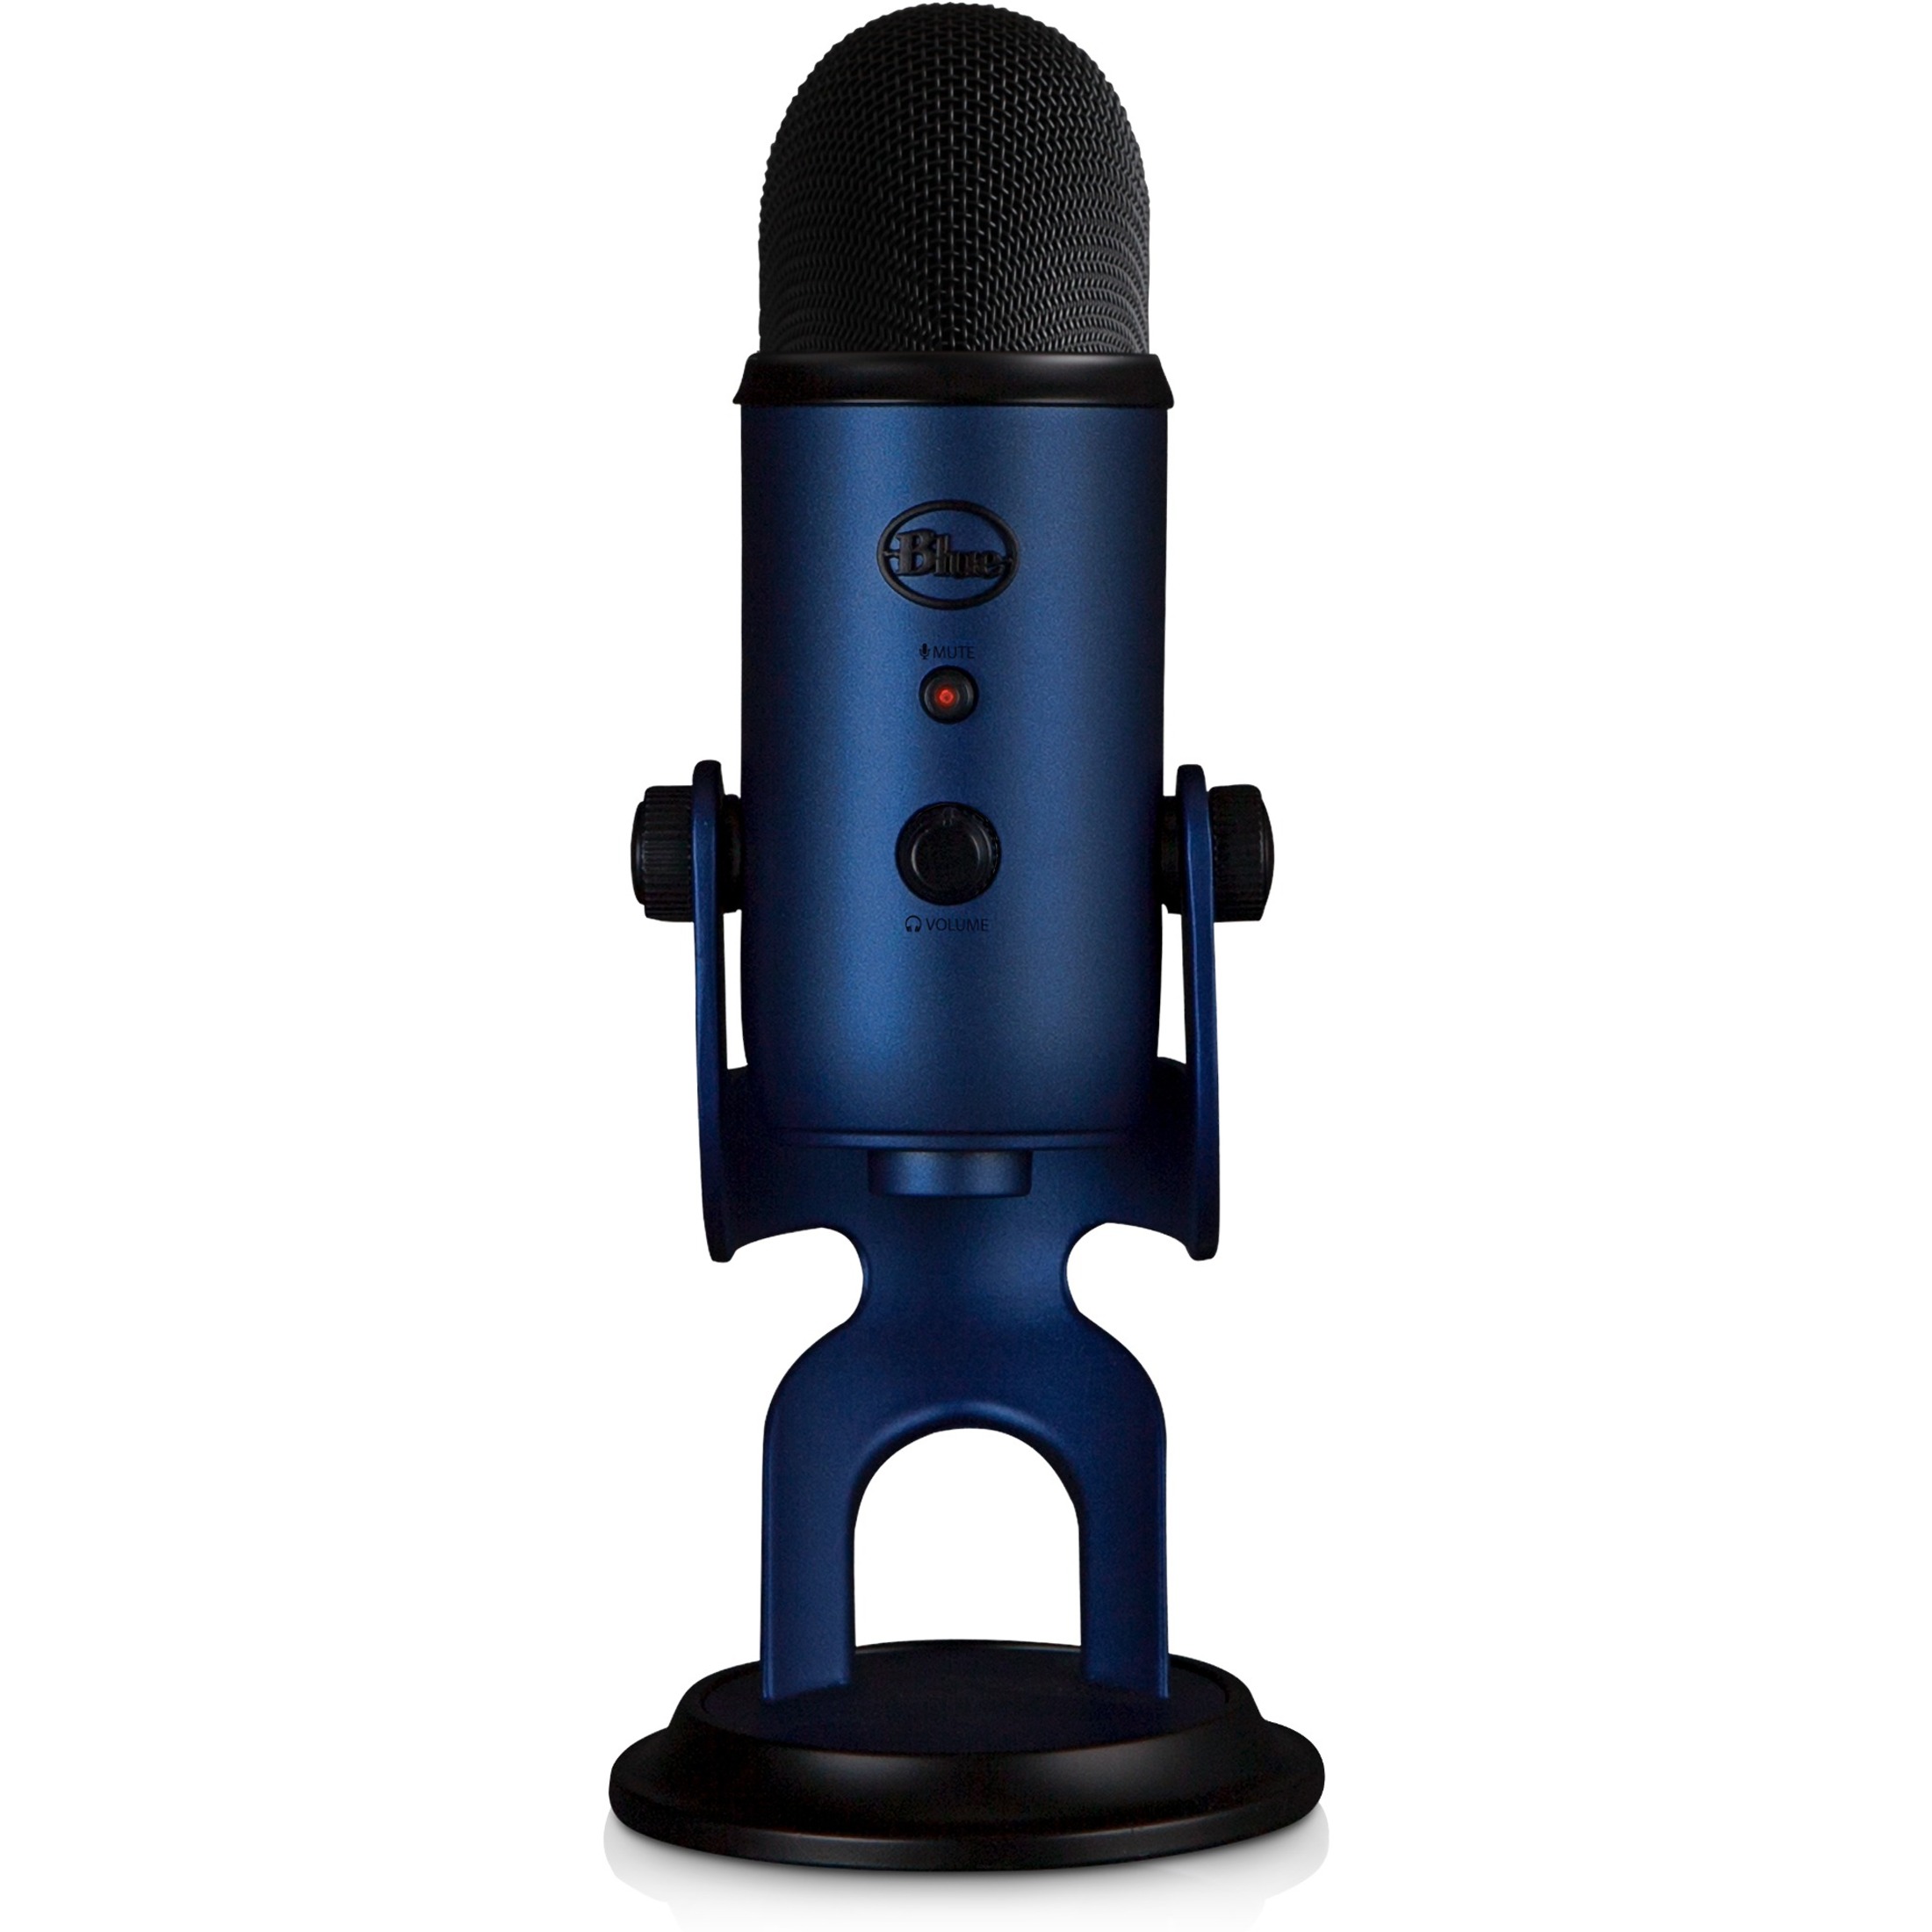 Blue Yeti USB Microphone, Midnight Blue - image 1 of 3